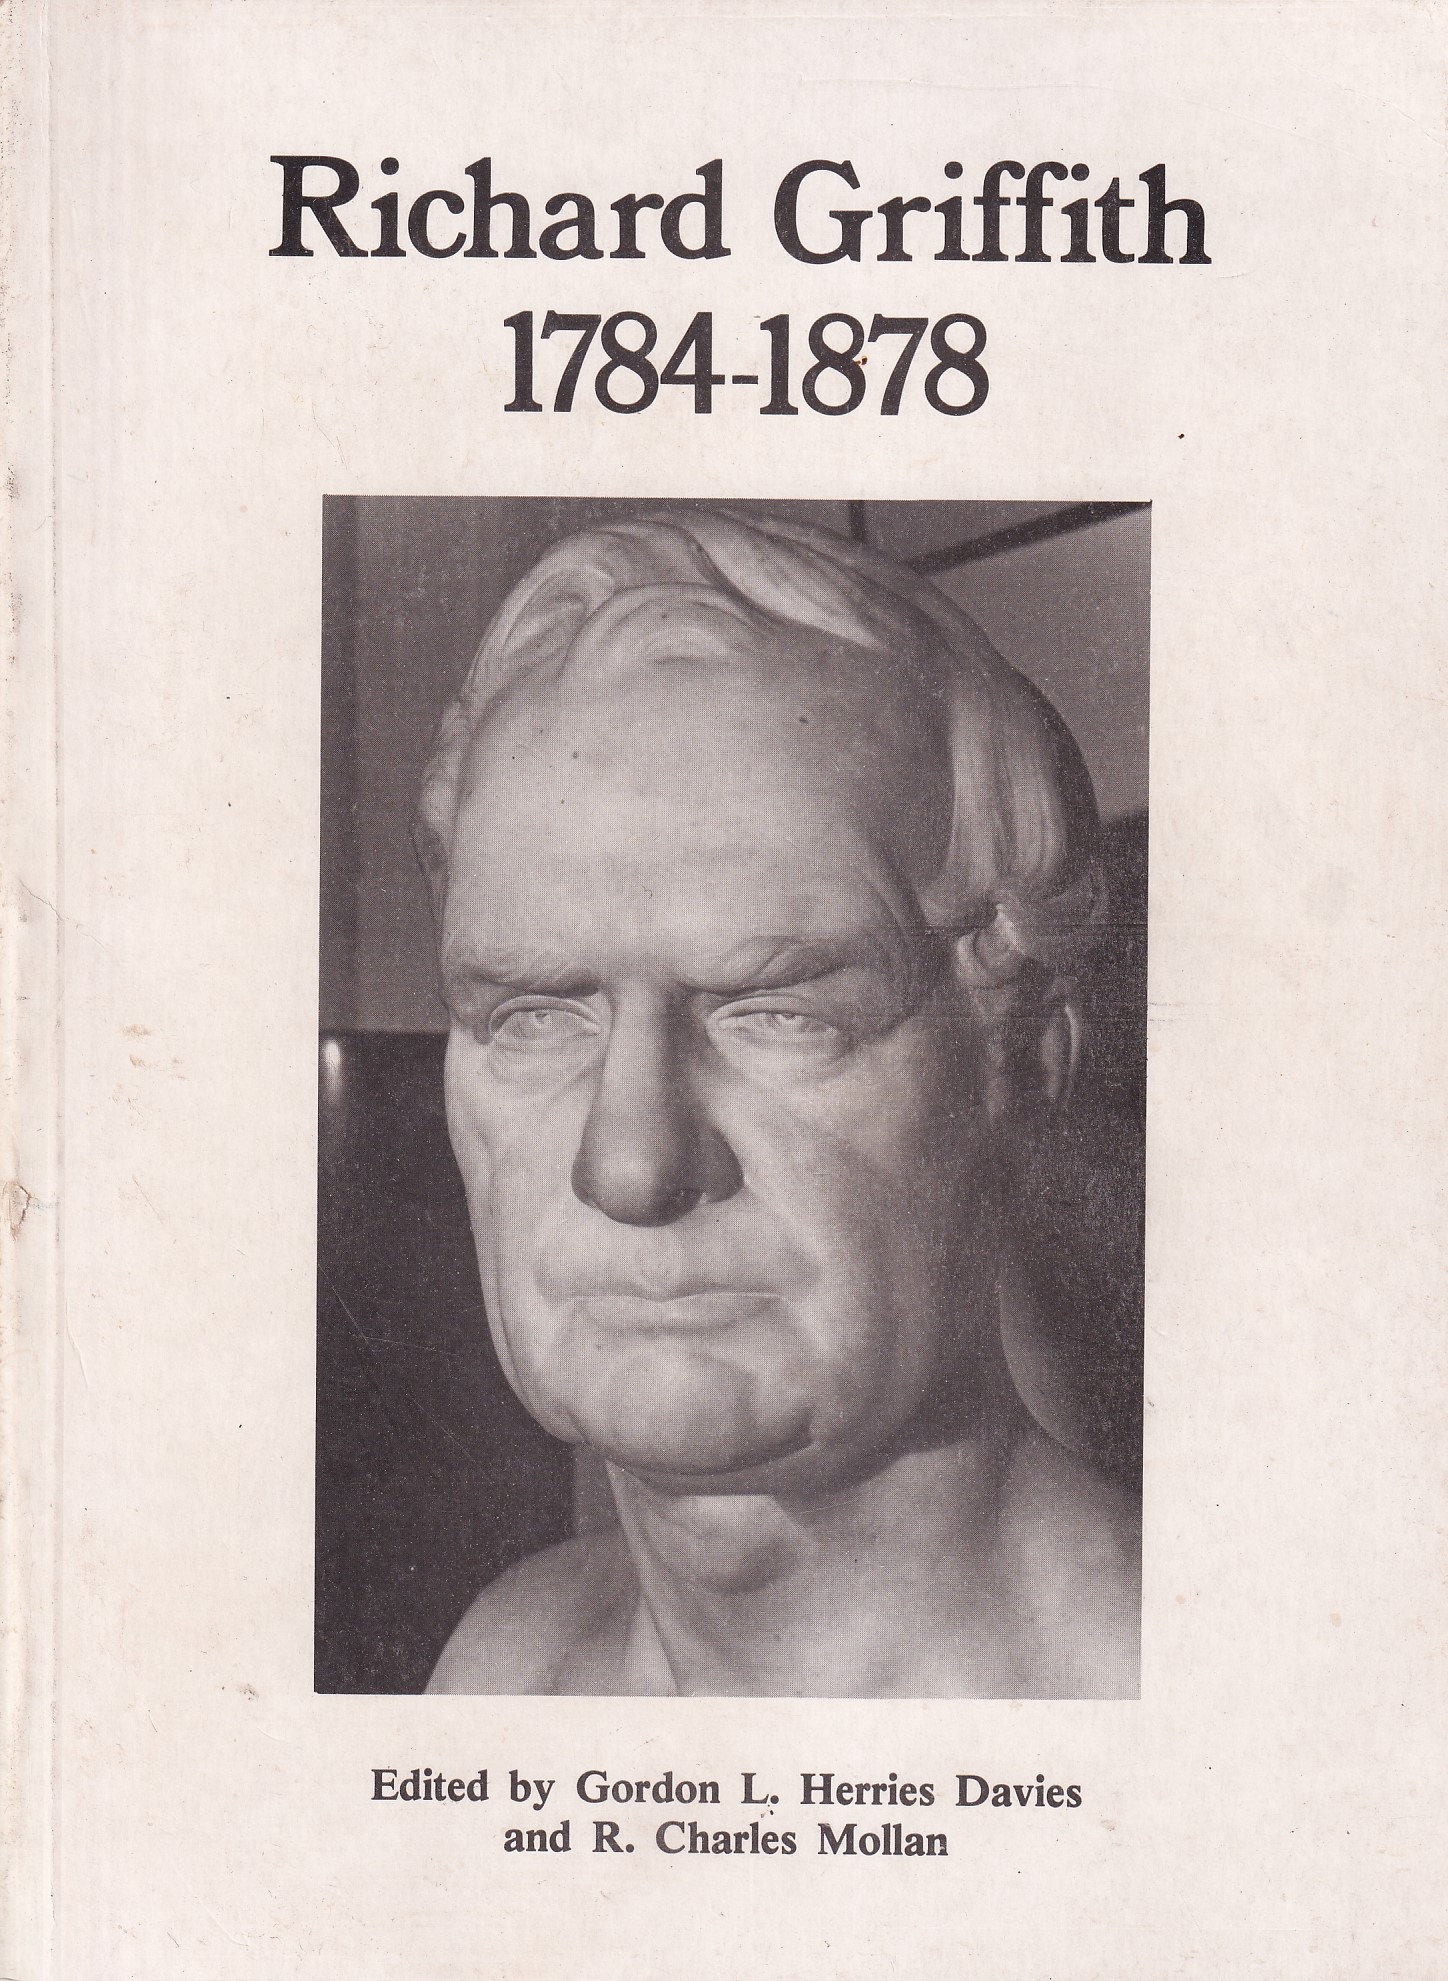 Richard Griffith: 1784-1878 by Gordon L. Herries Davies & R. Charles Mollan (eds.)